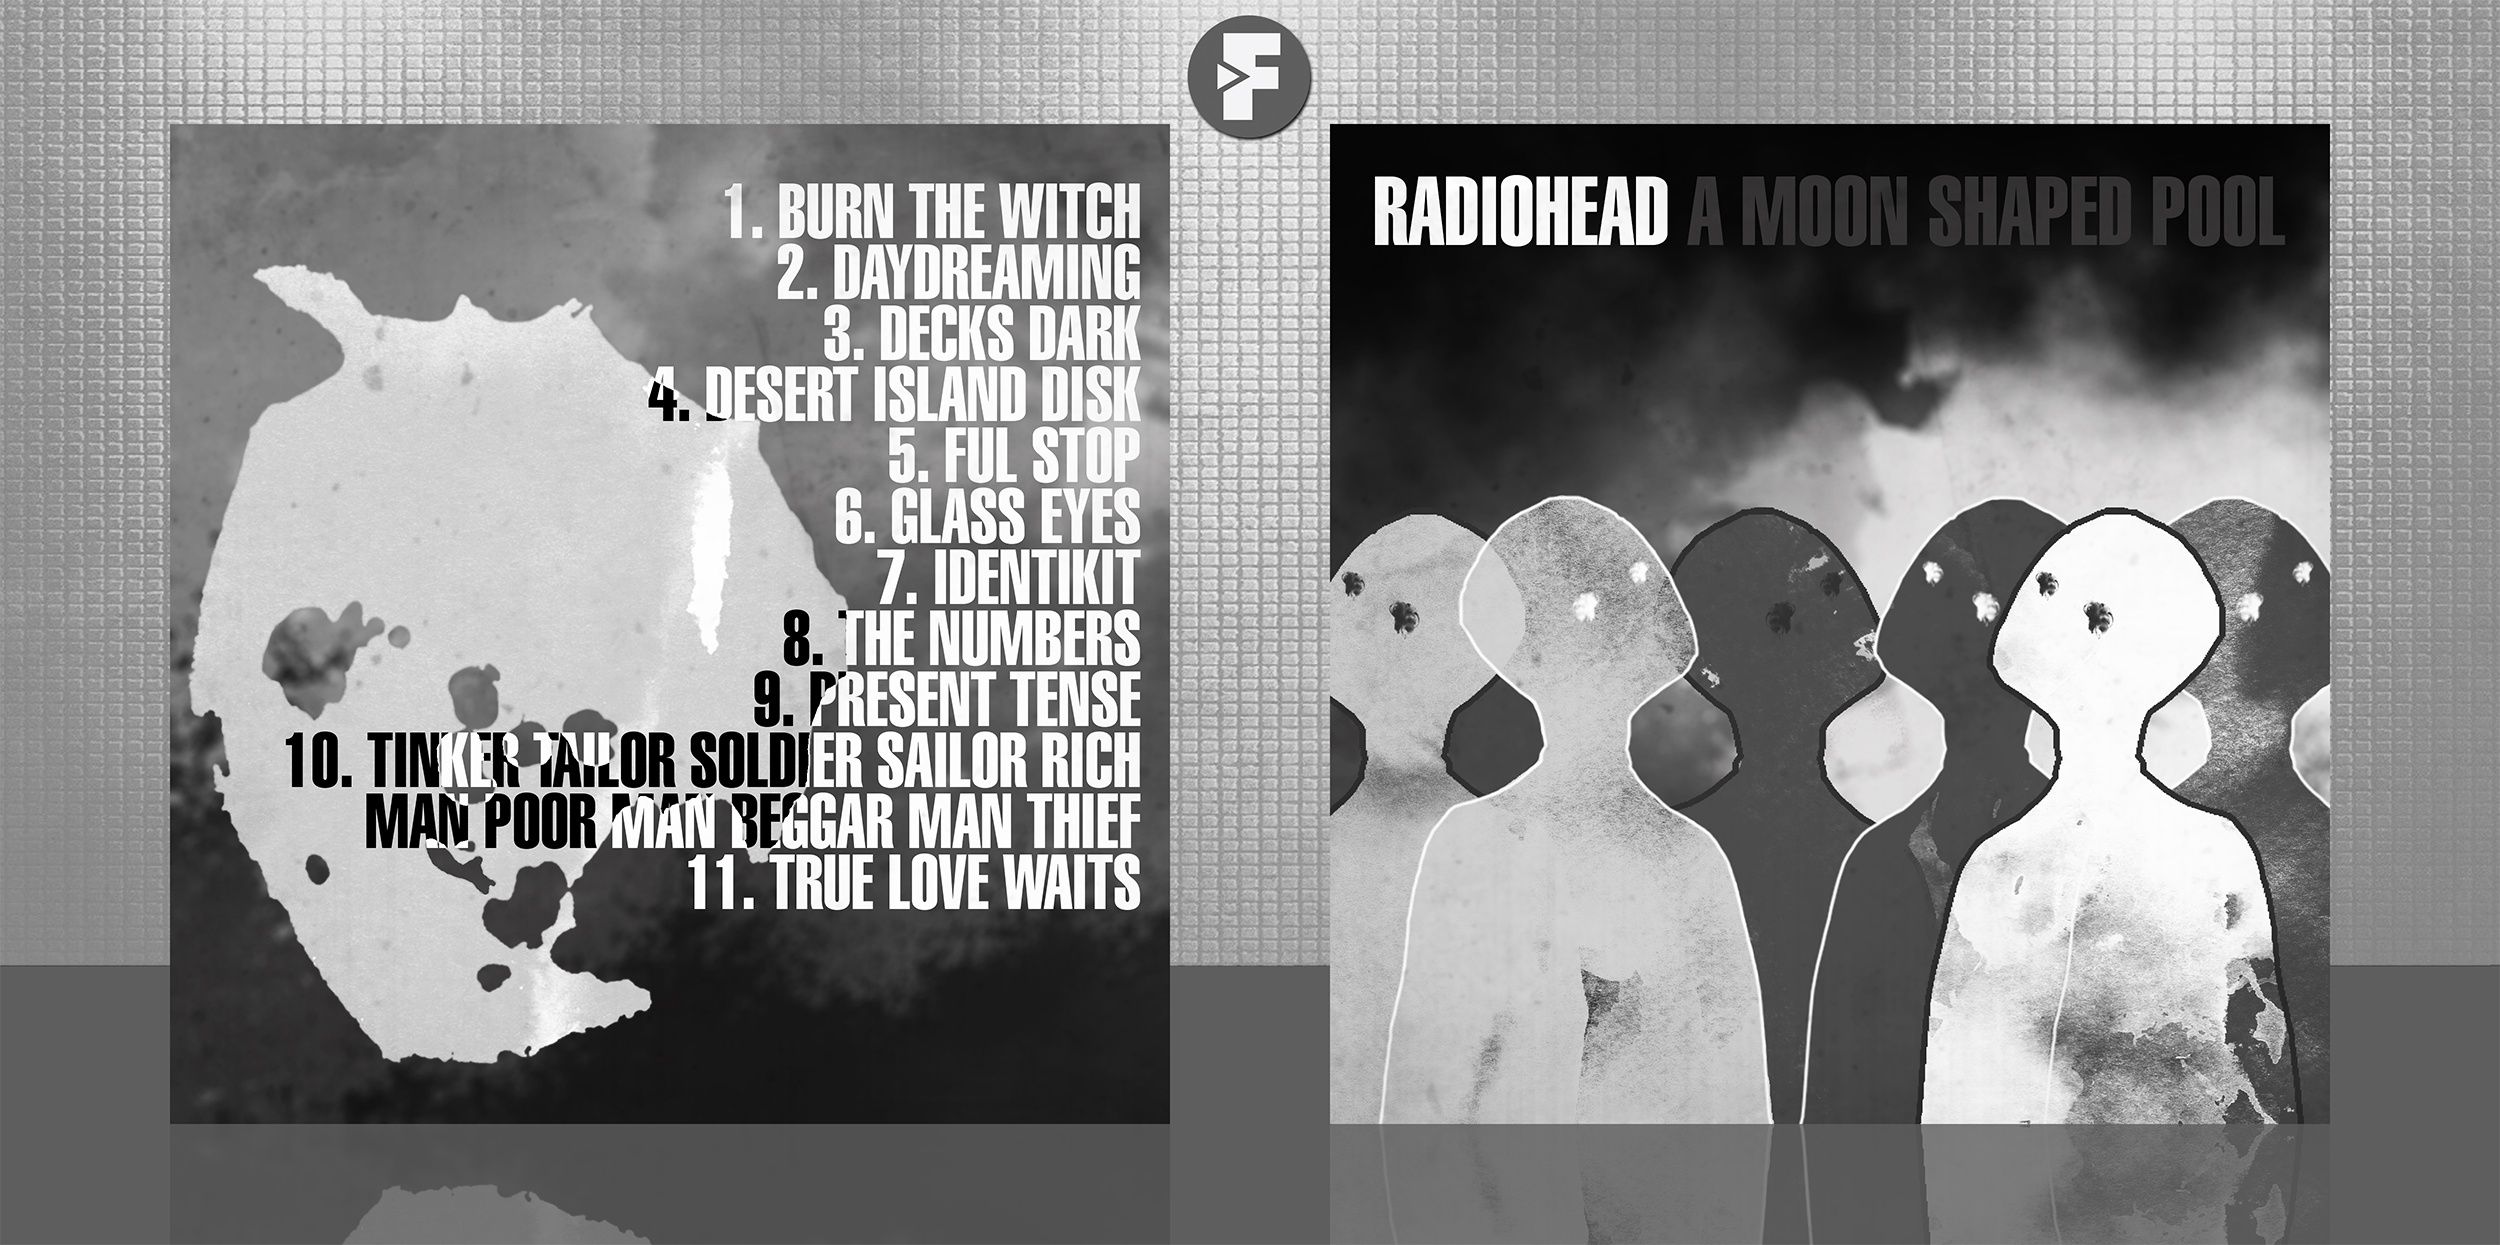 Radiohead - A Moon Shaped Pool box cover